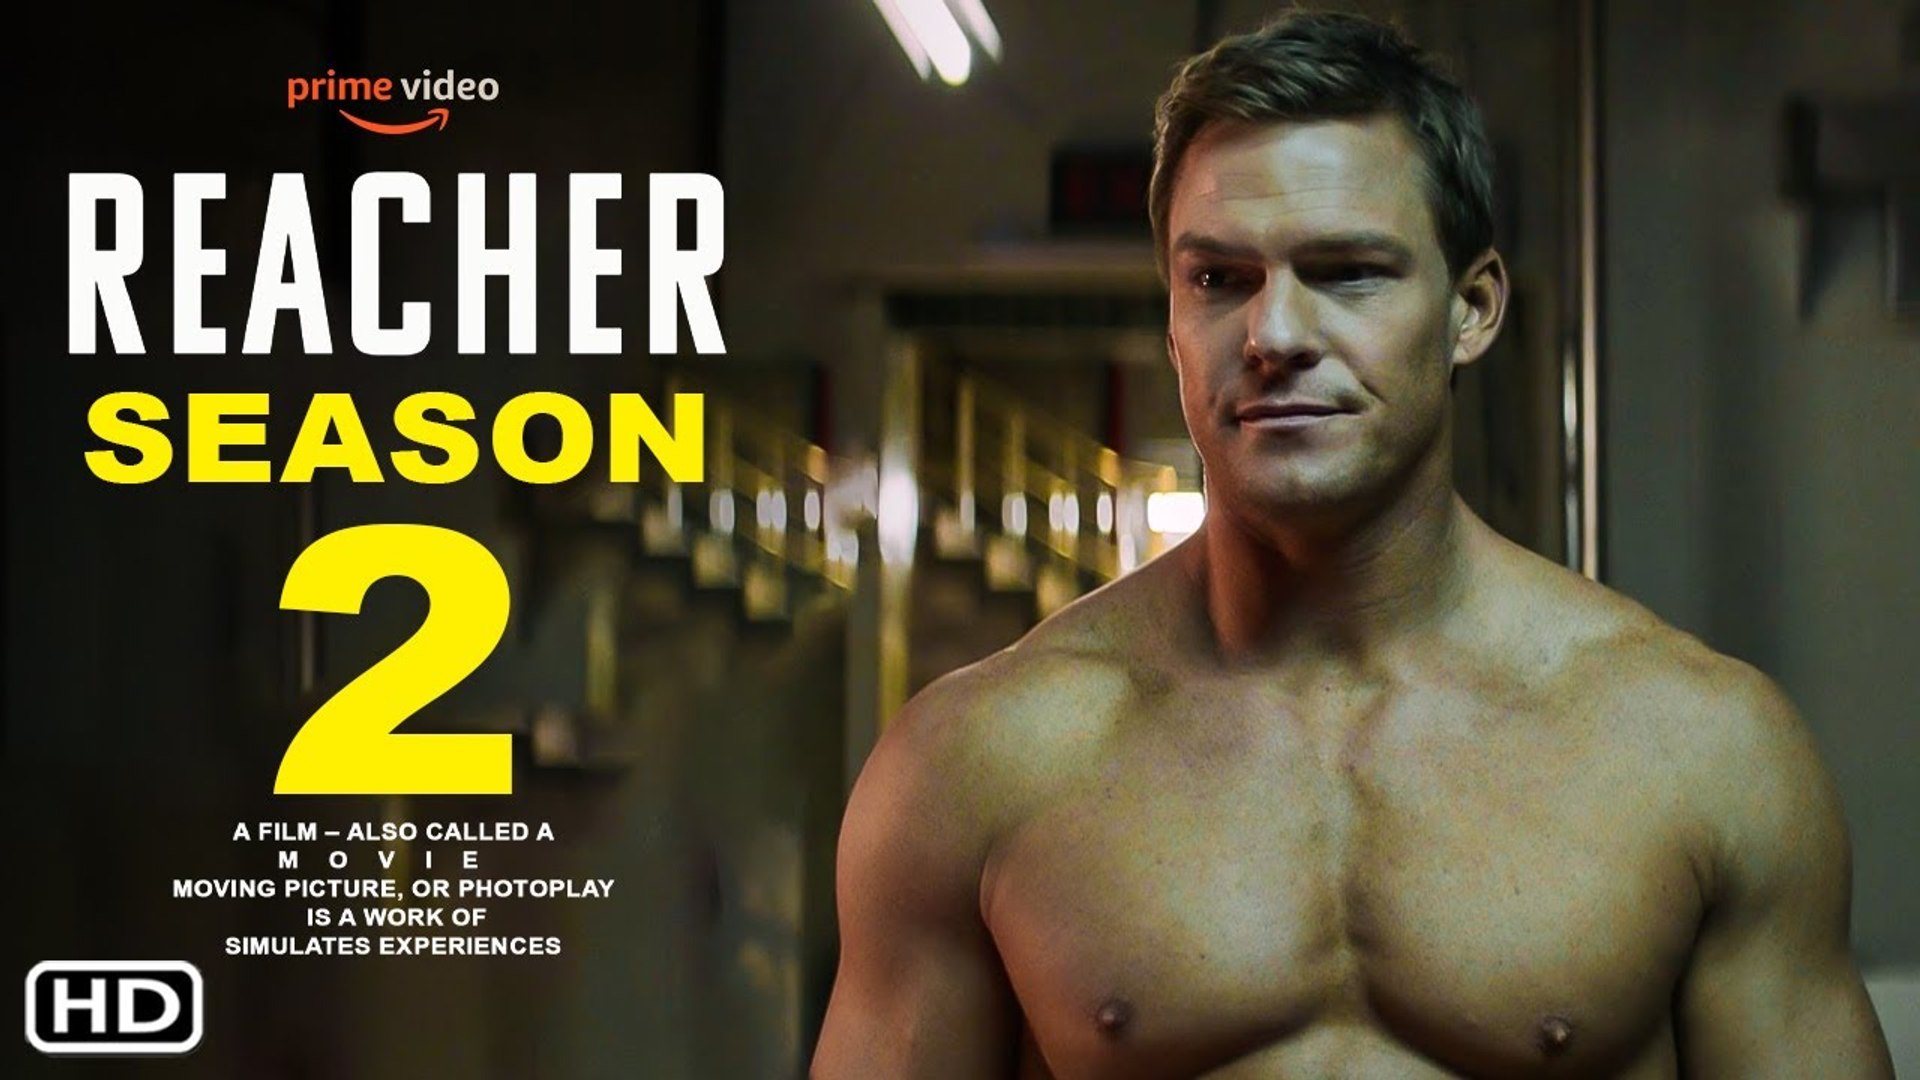 Watch: Jack Reacher 2 Full Trailer